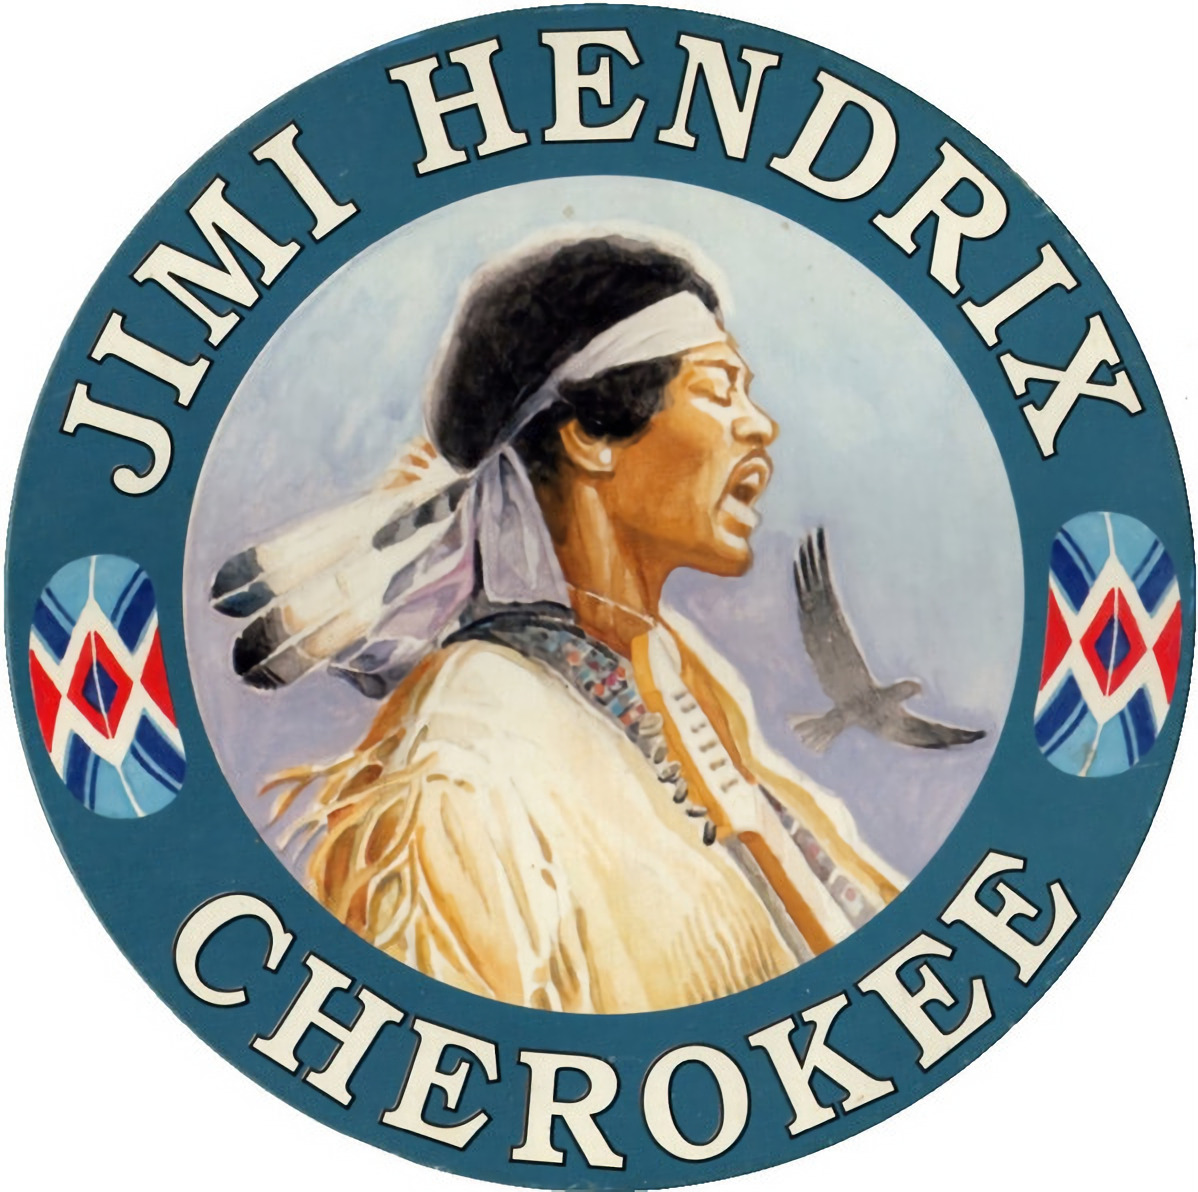 Cherokee / Jimi Hendrix